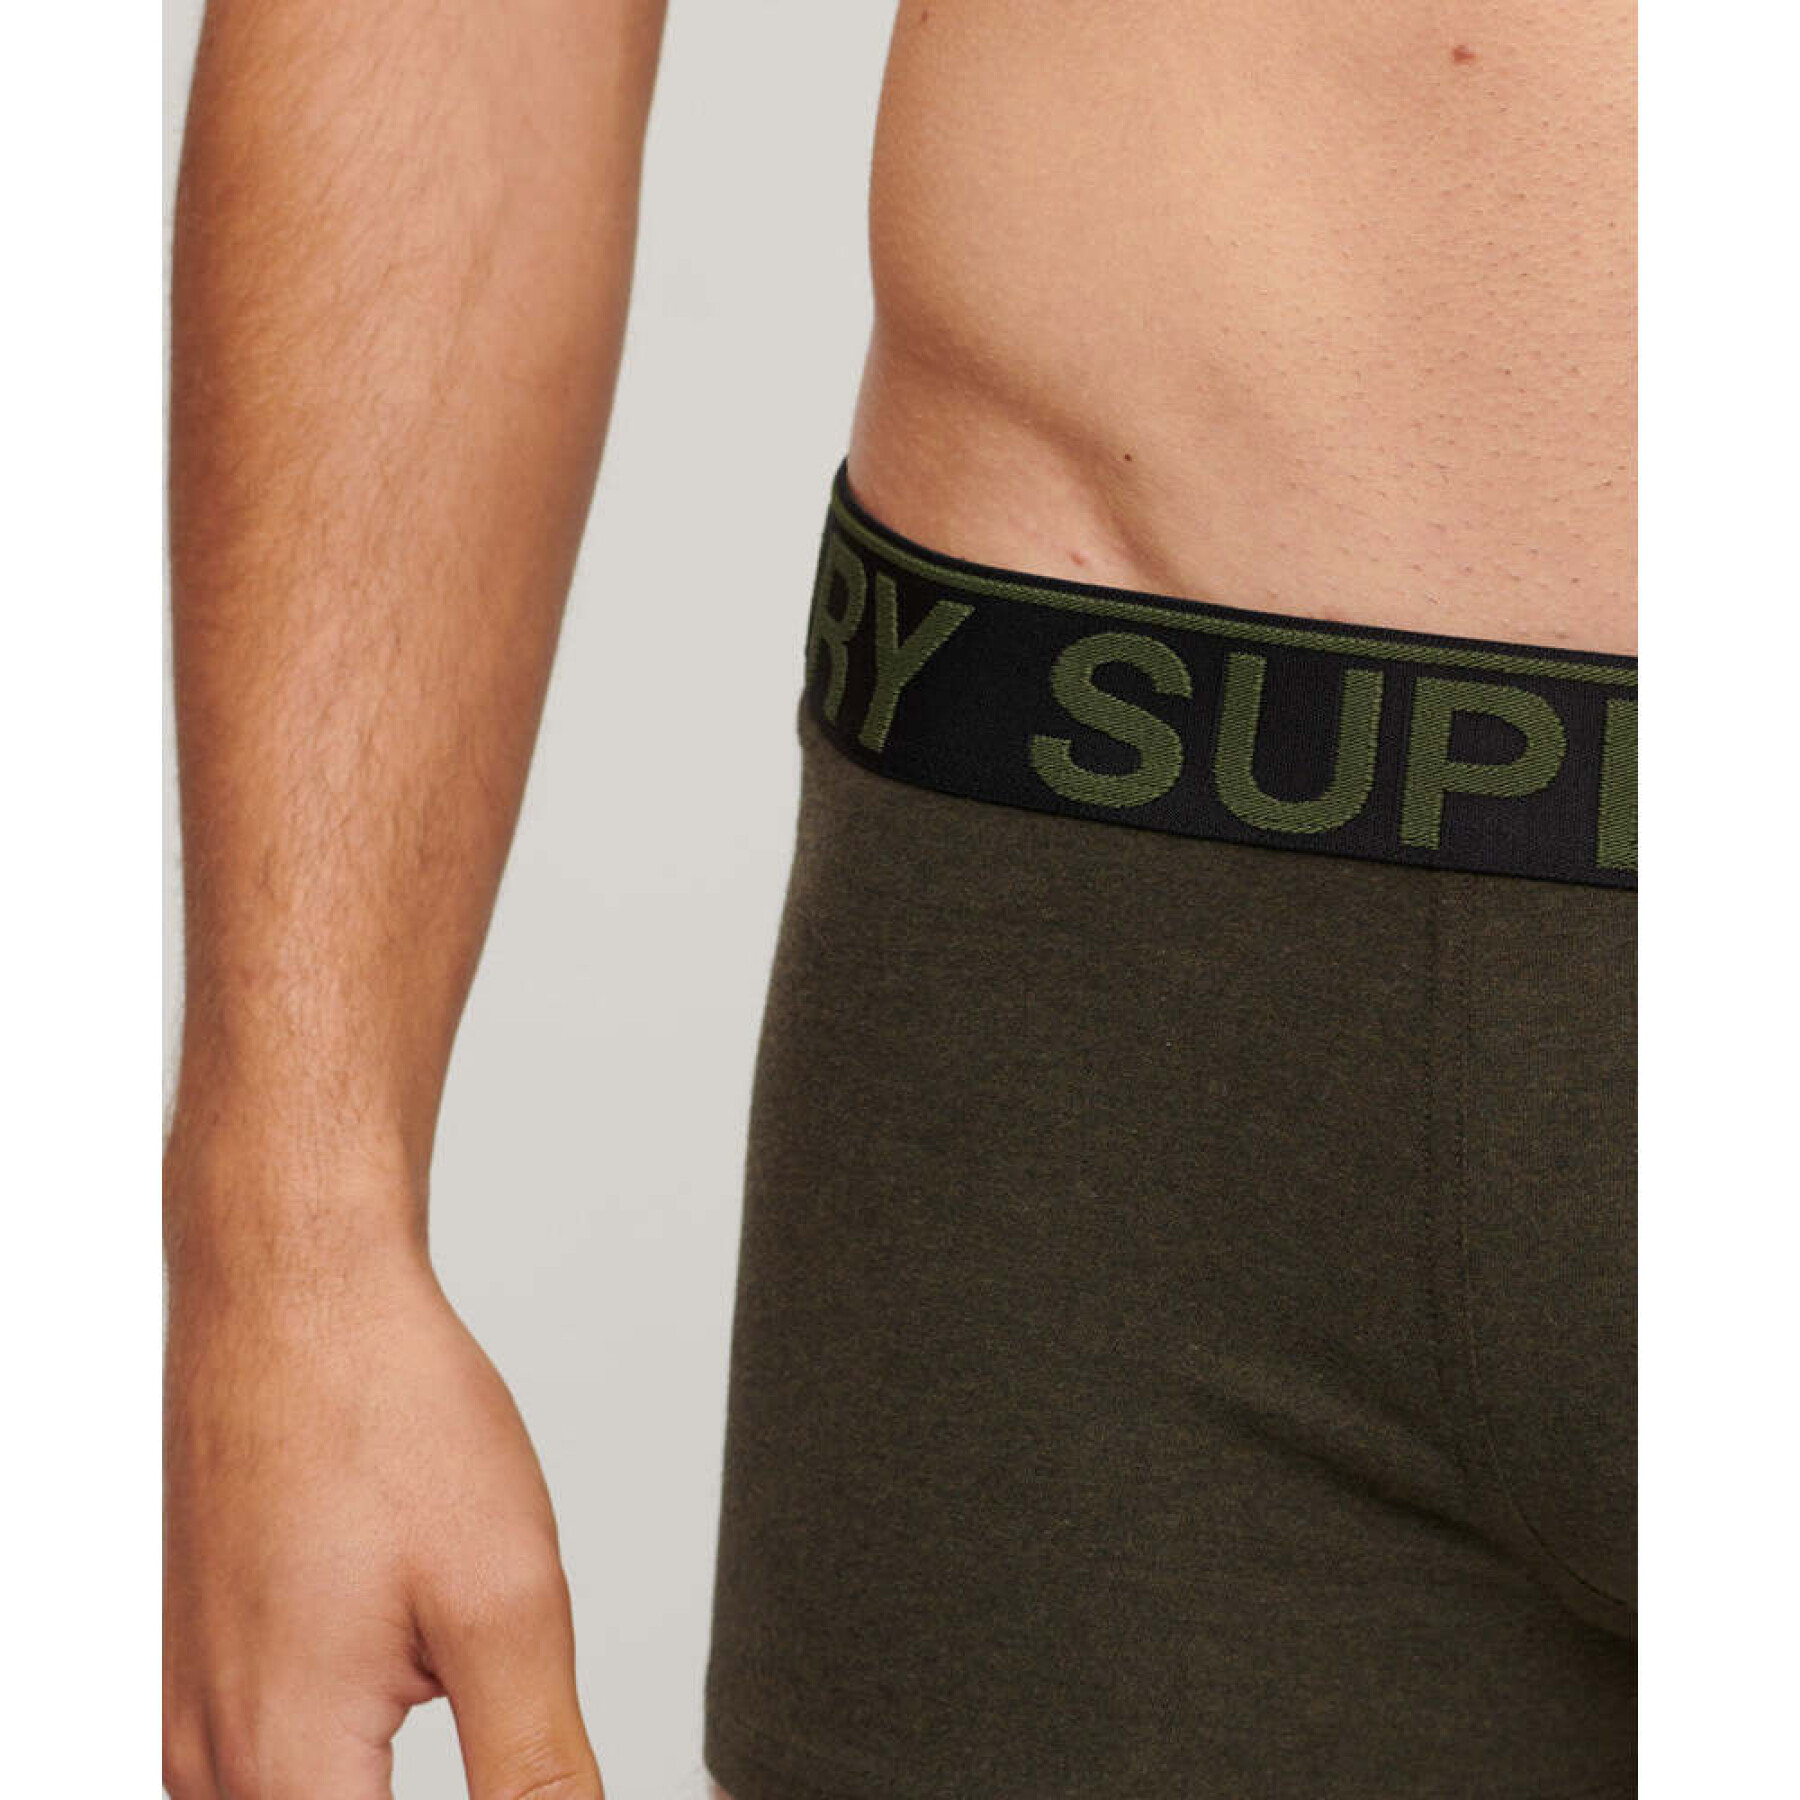 Pantalones Superdry (x2)